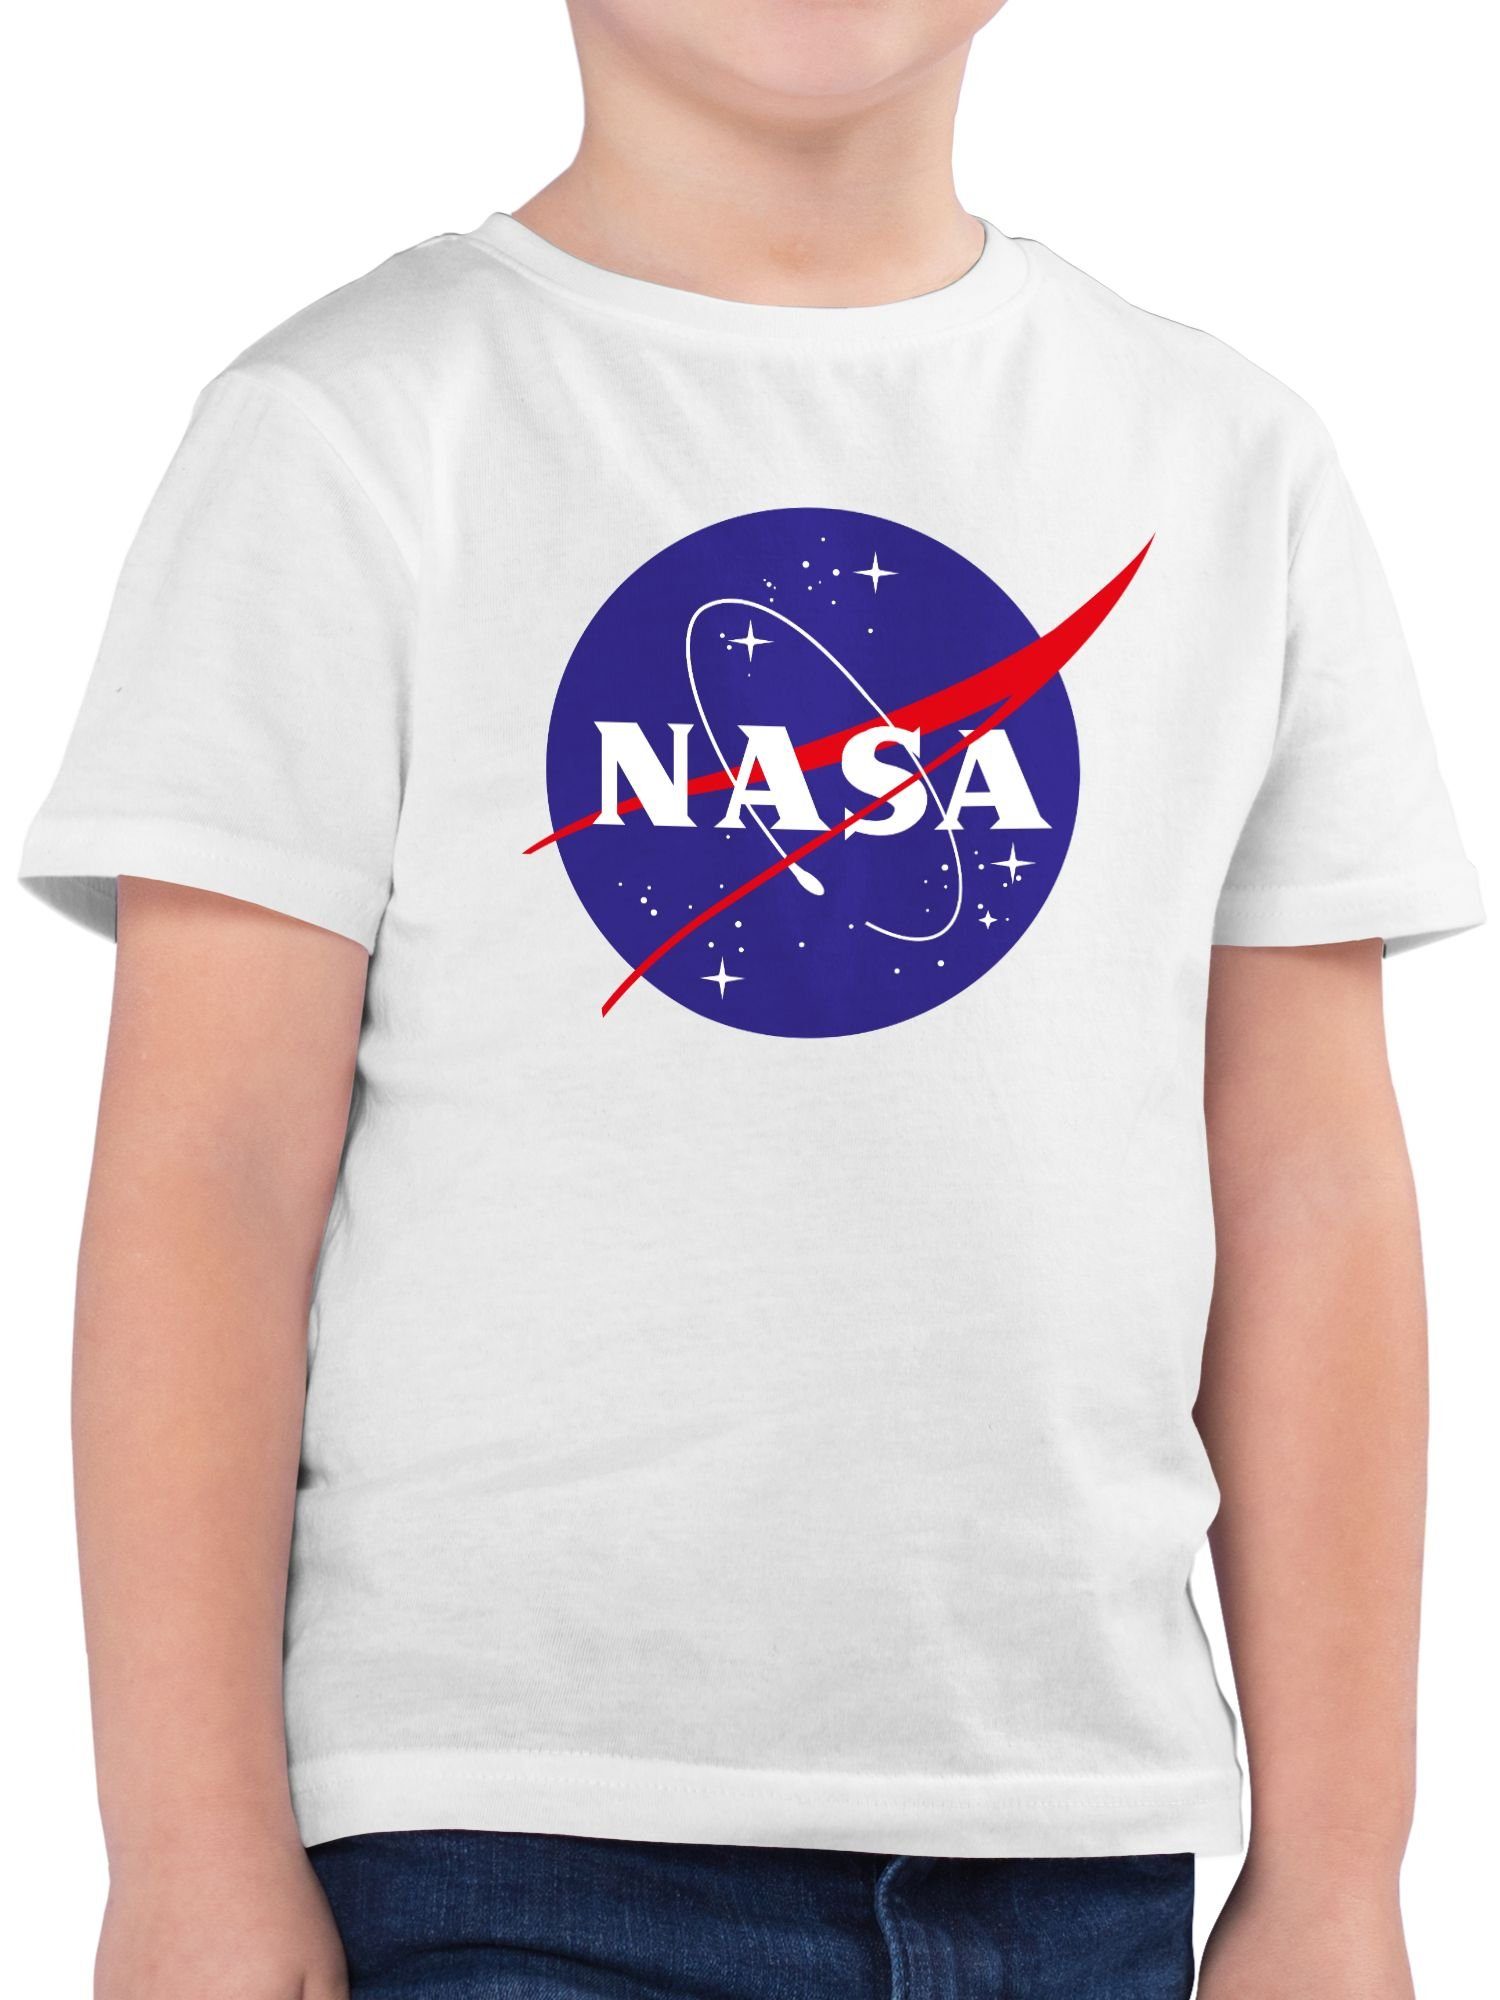 Shirtracer T-Shirt Nasa Meatball Logo Kinderkleidung und Co 1 Weiß